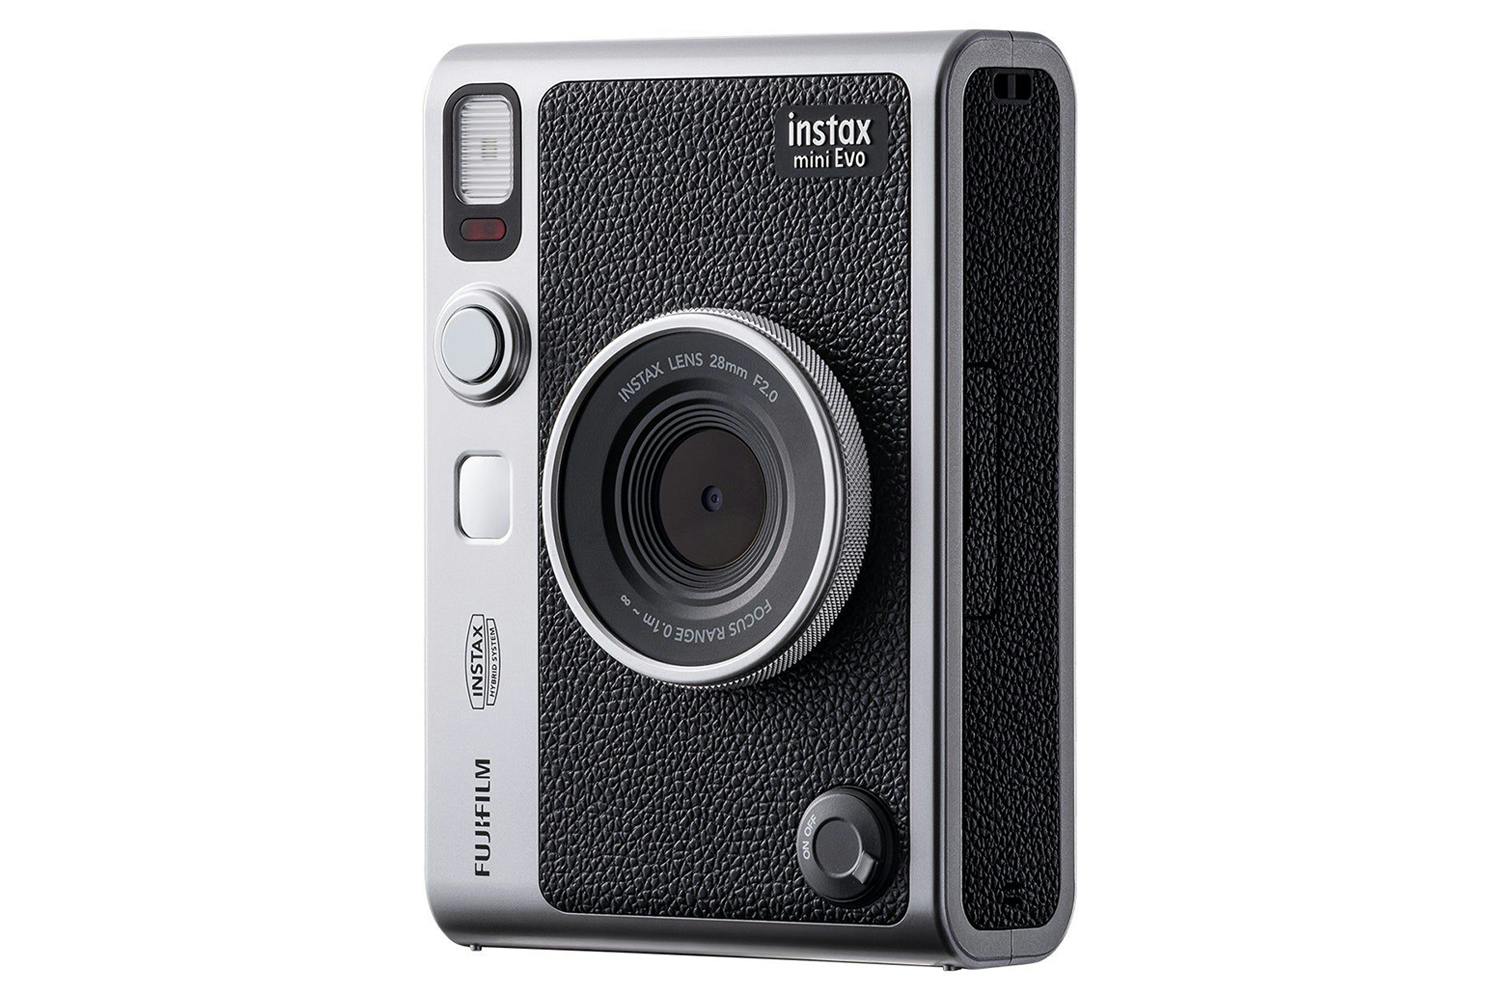 Fujifilm Instax Mini Evo Instant Camera, Black